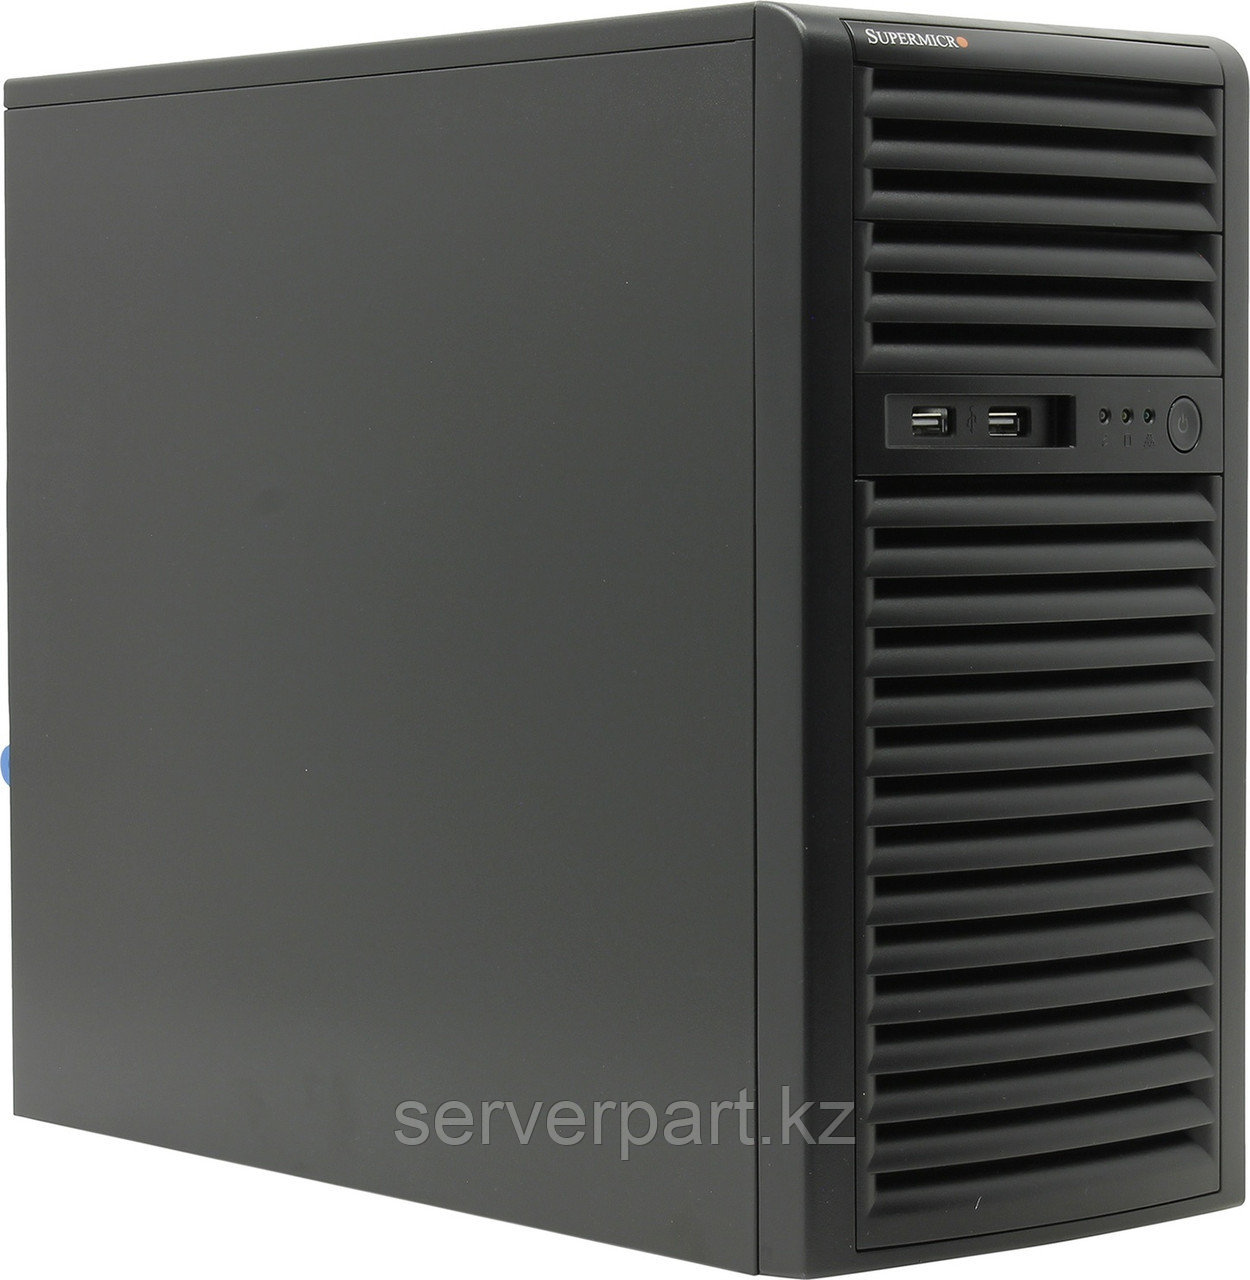 Сервер Supermicro SYS-5039C (Tower 4LFF)/4-core intel xeon E2224 (3.4GHz)/48GB EUDIMM